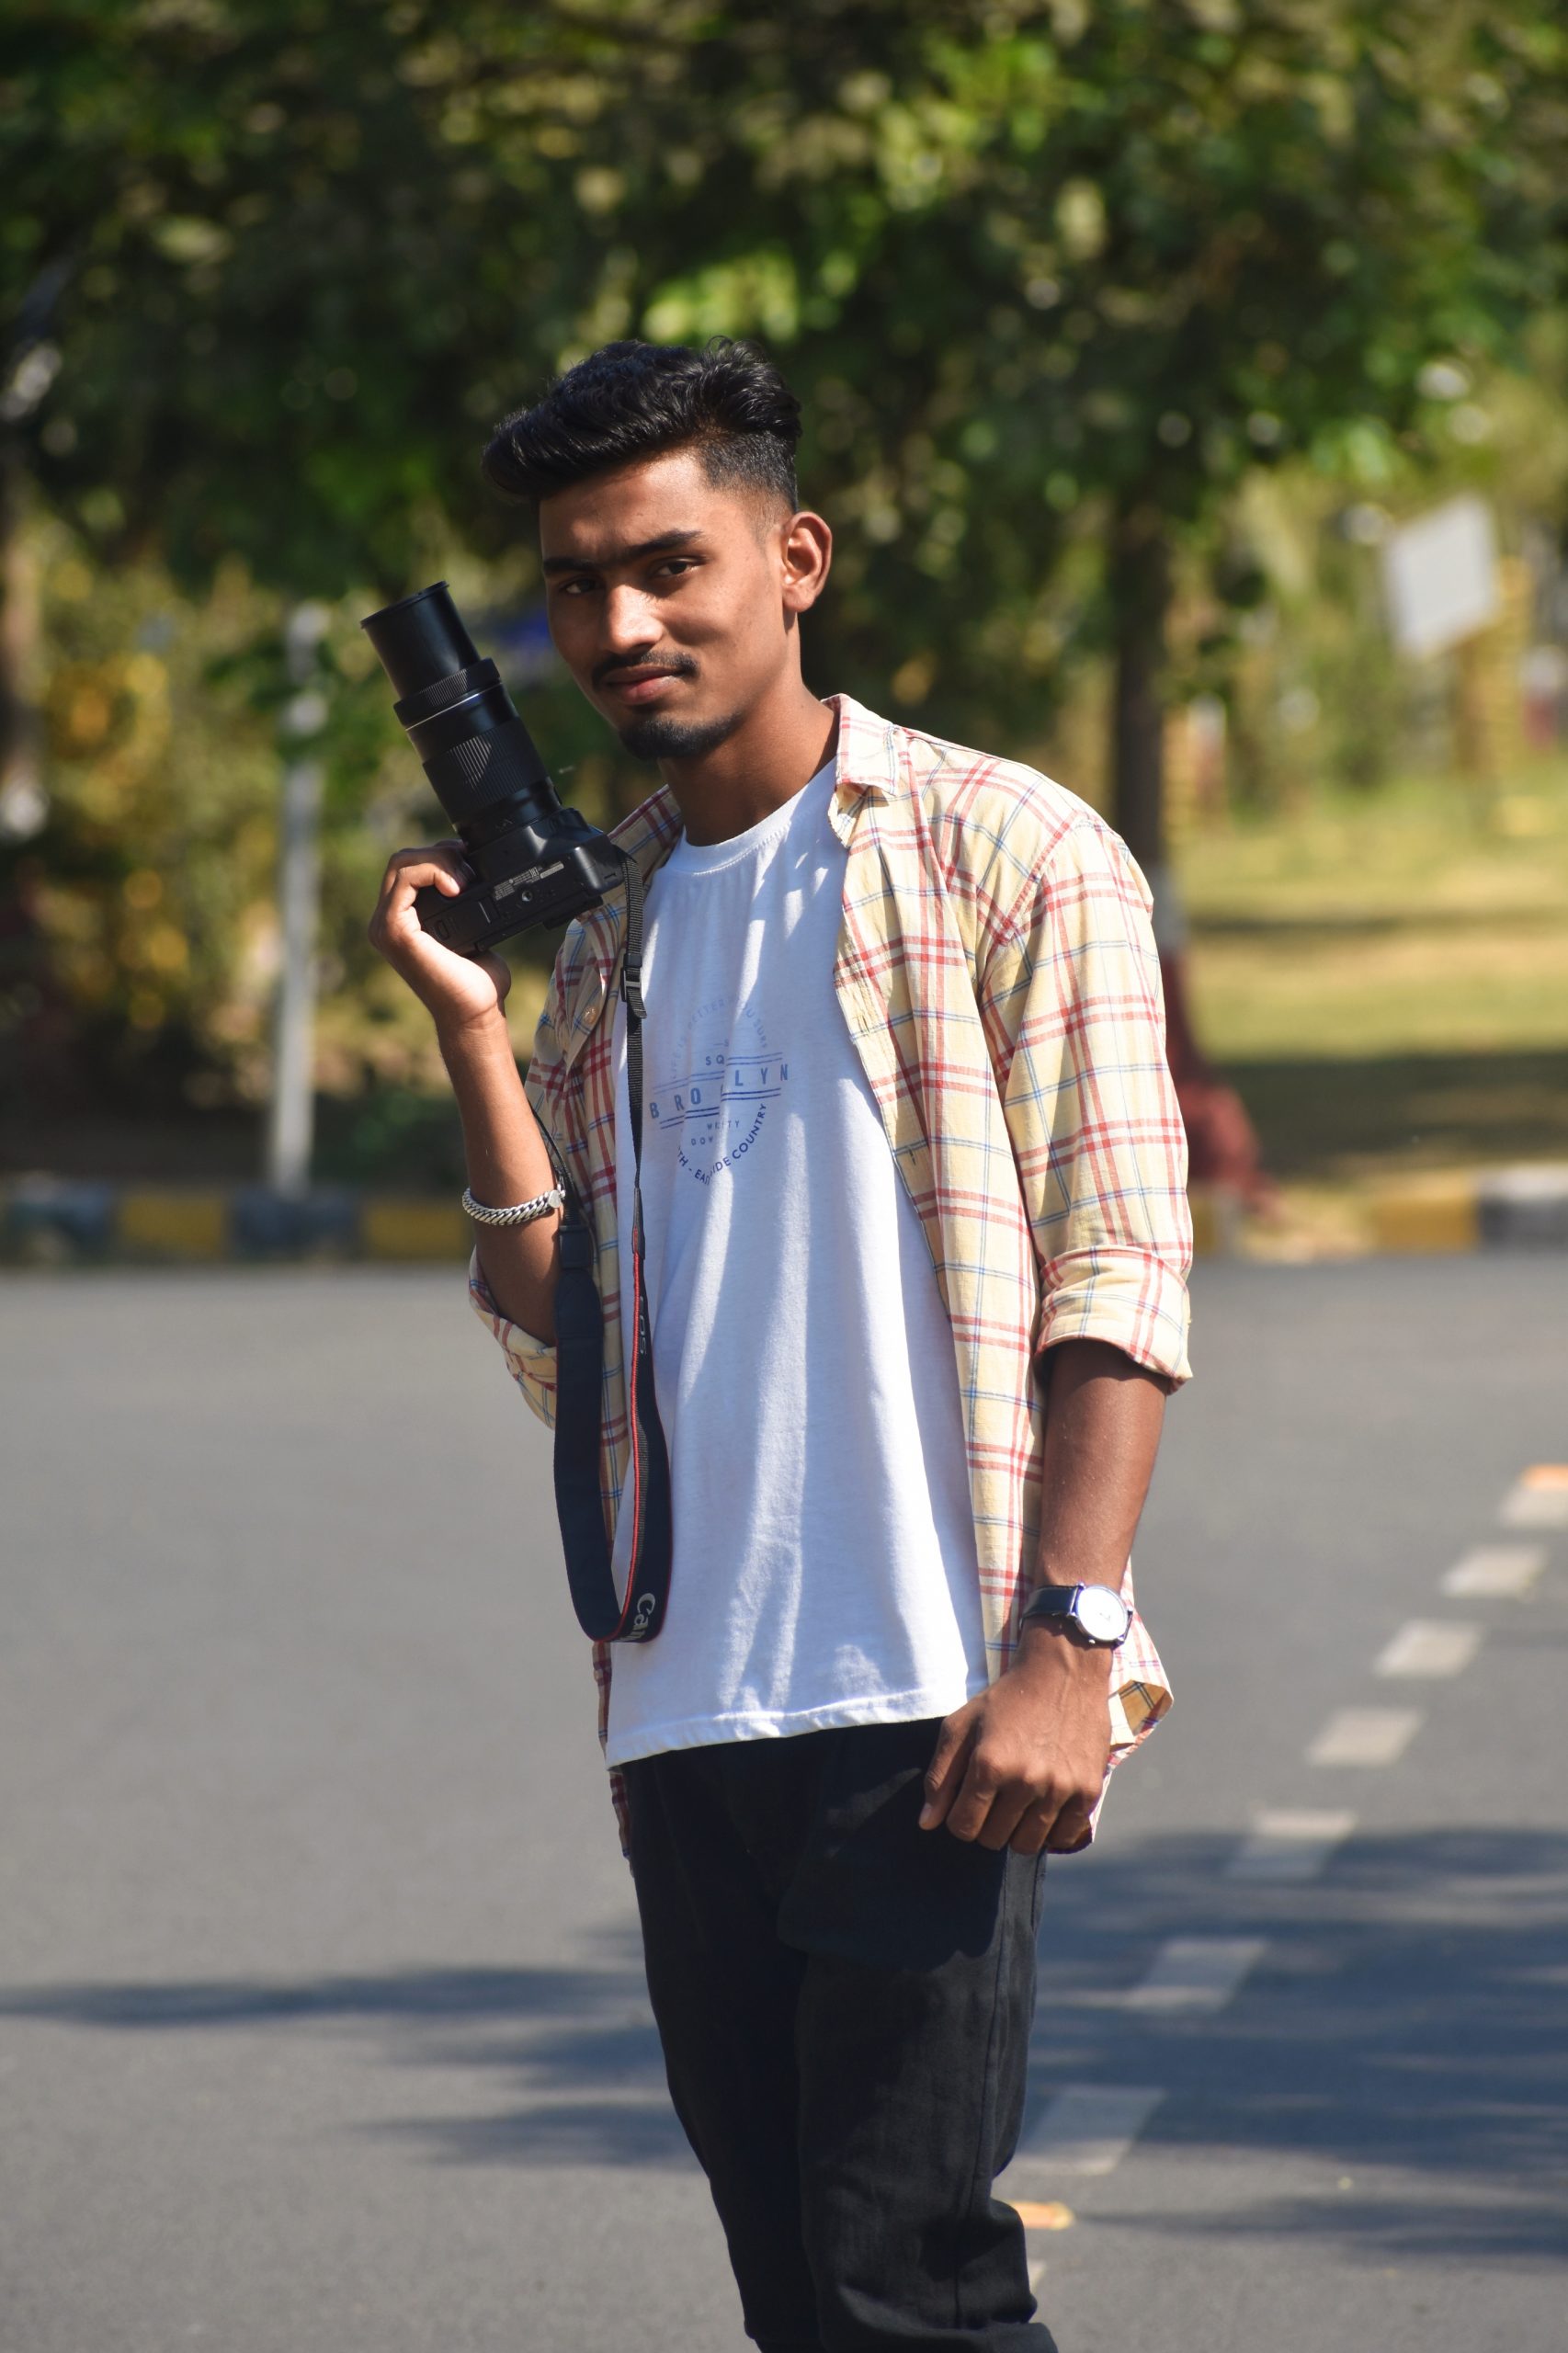 Stylish boy posing with camera